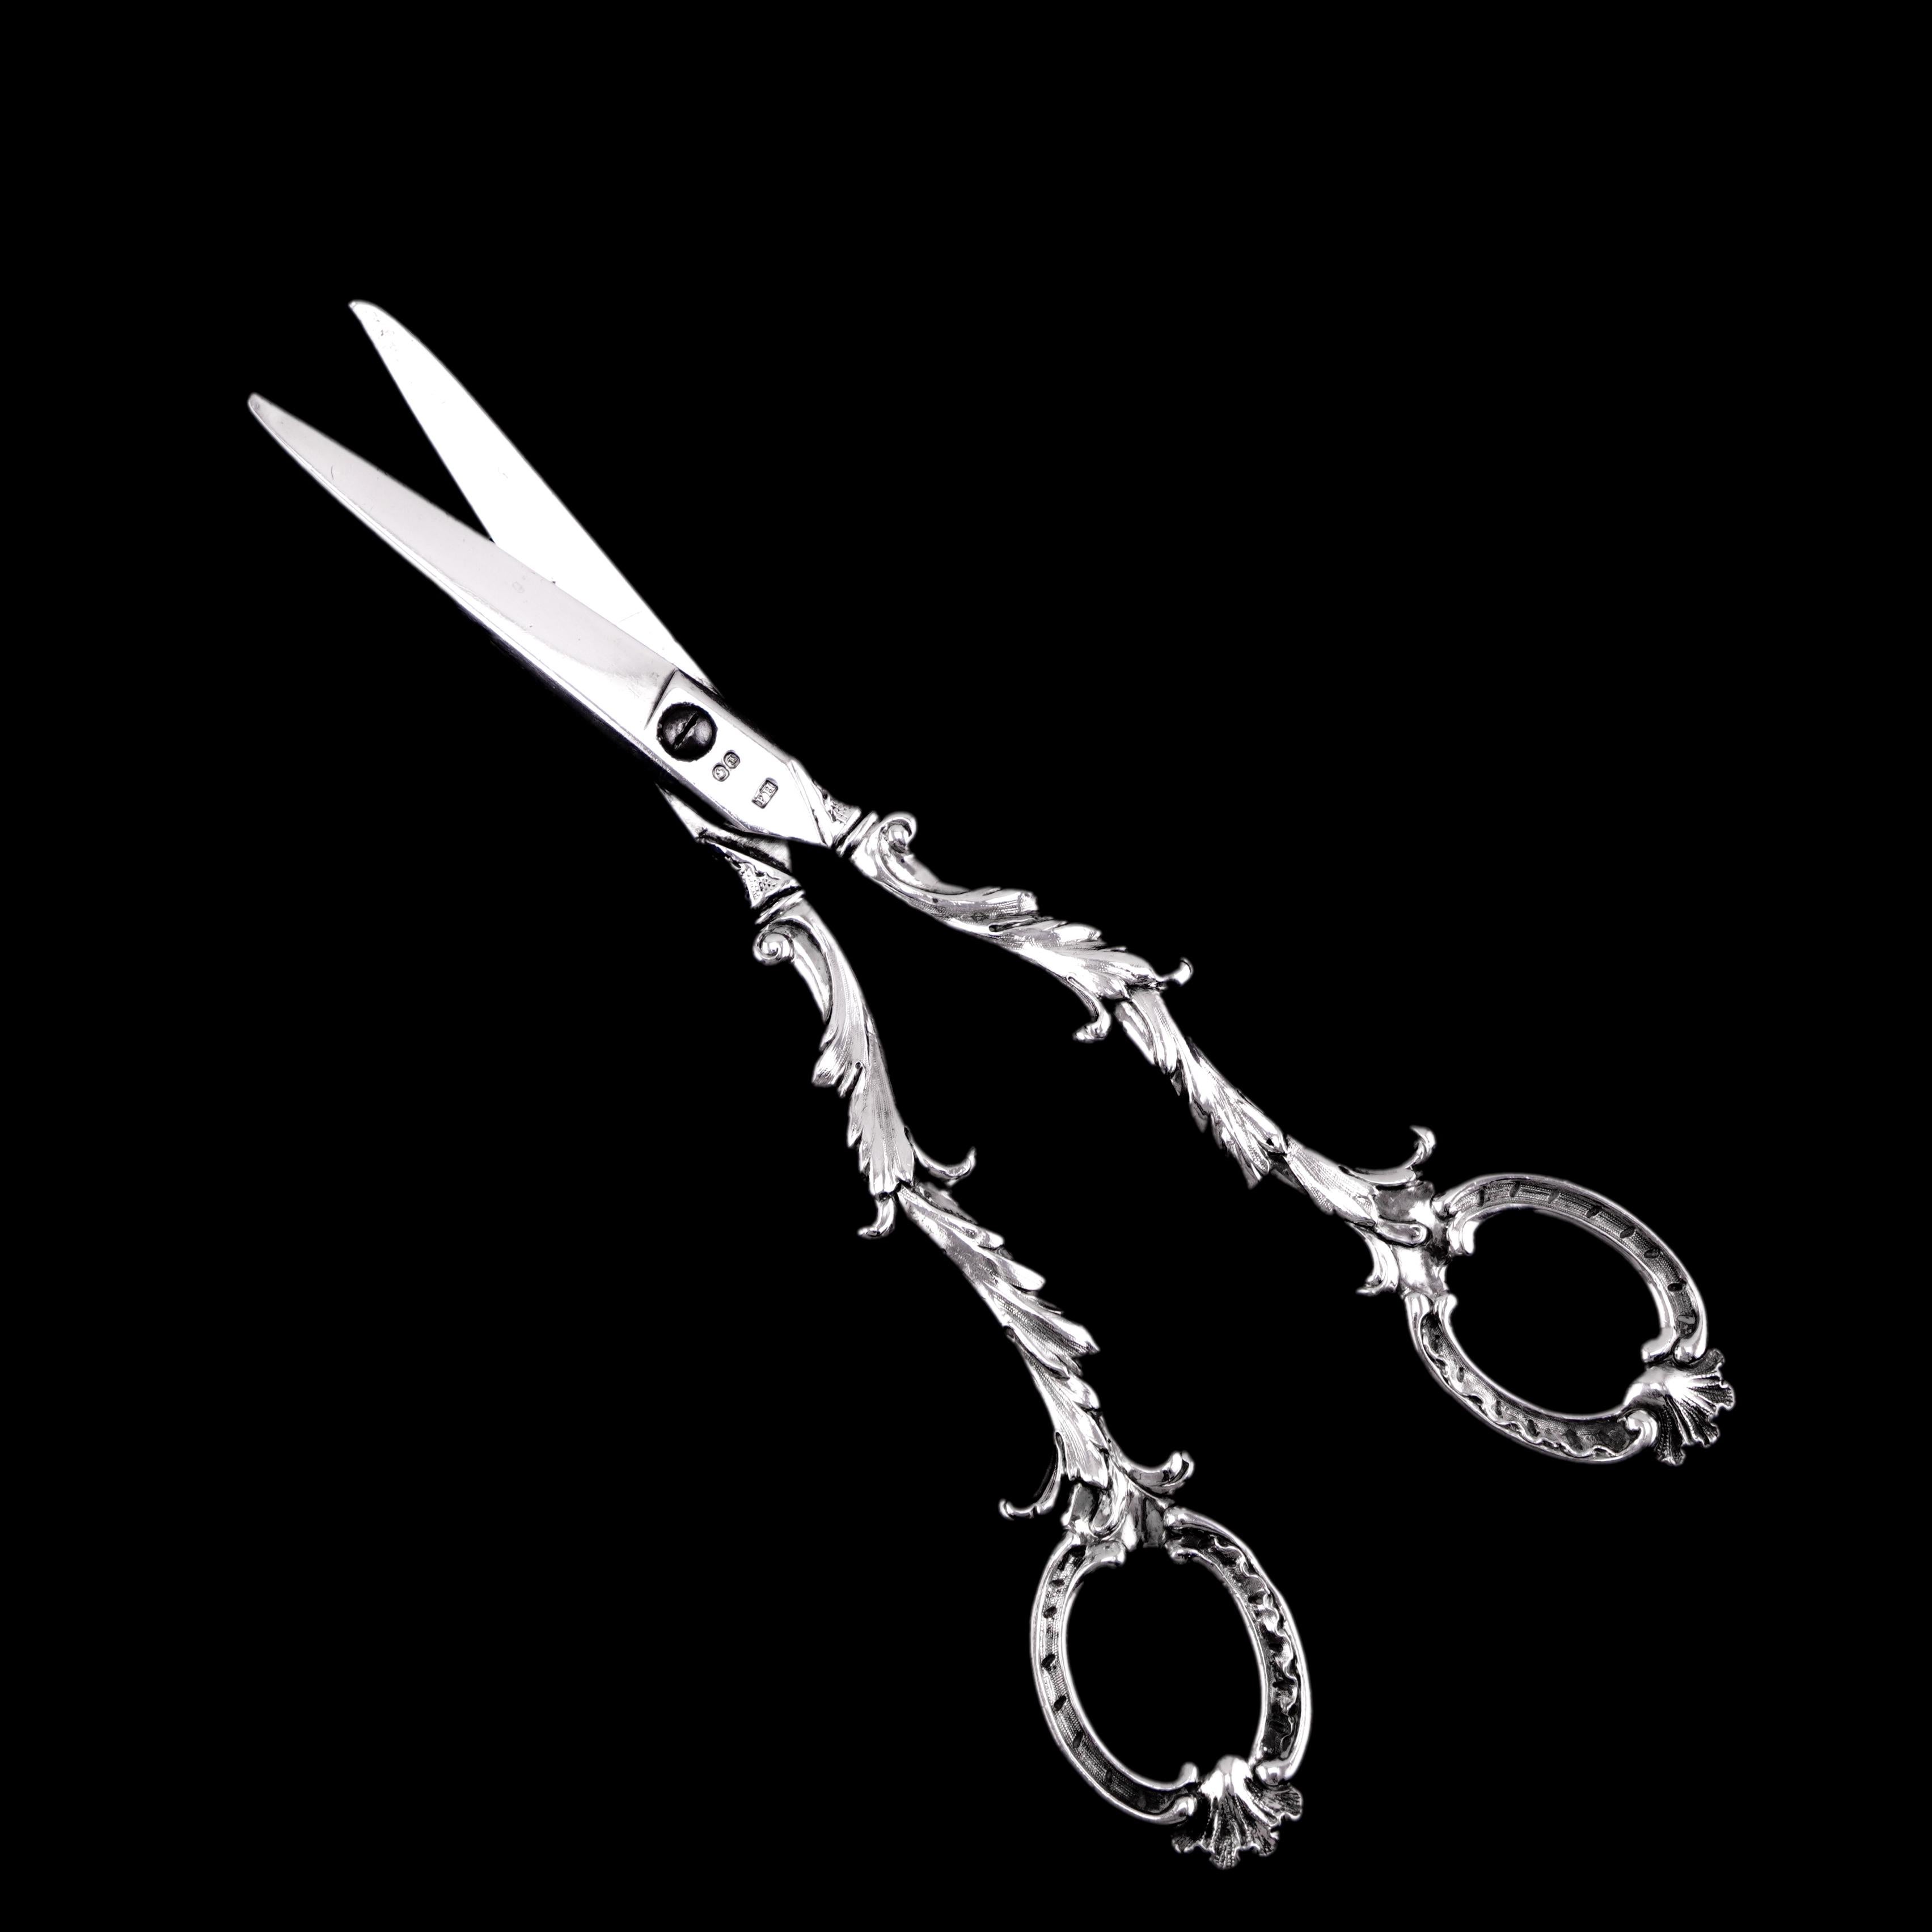 Antique Victorian Solid Silver Scissors/Grape Shears Cast Acanthus Design 1846 For Sale 5